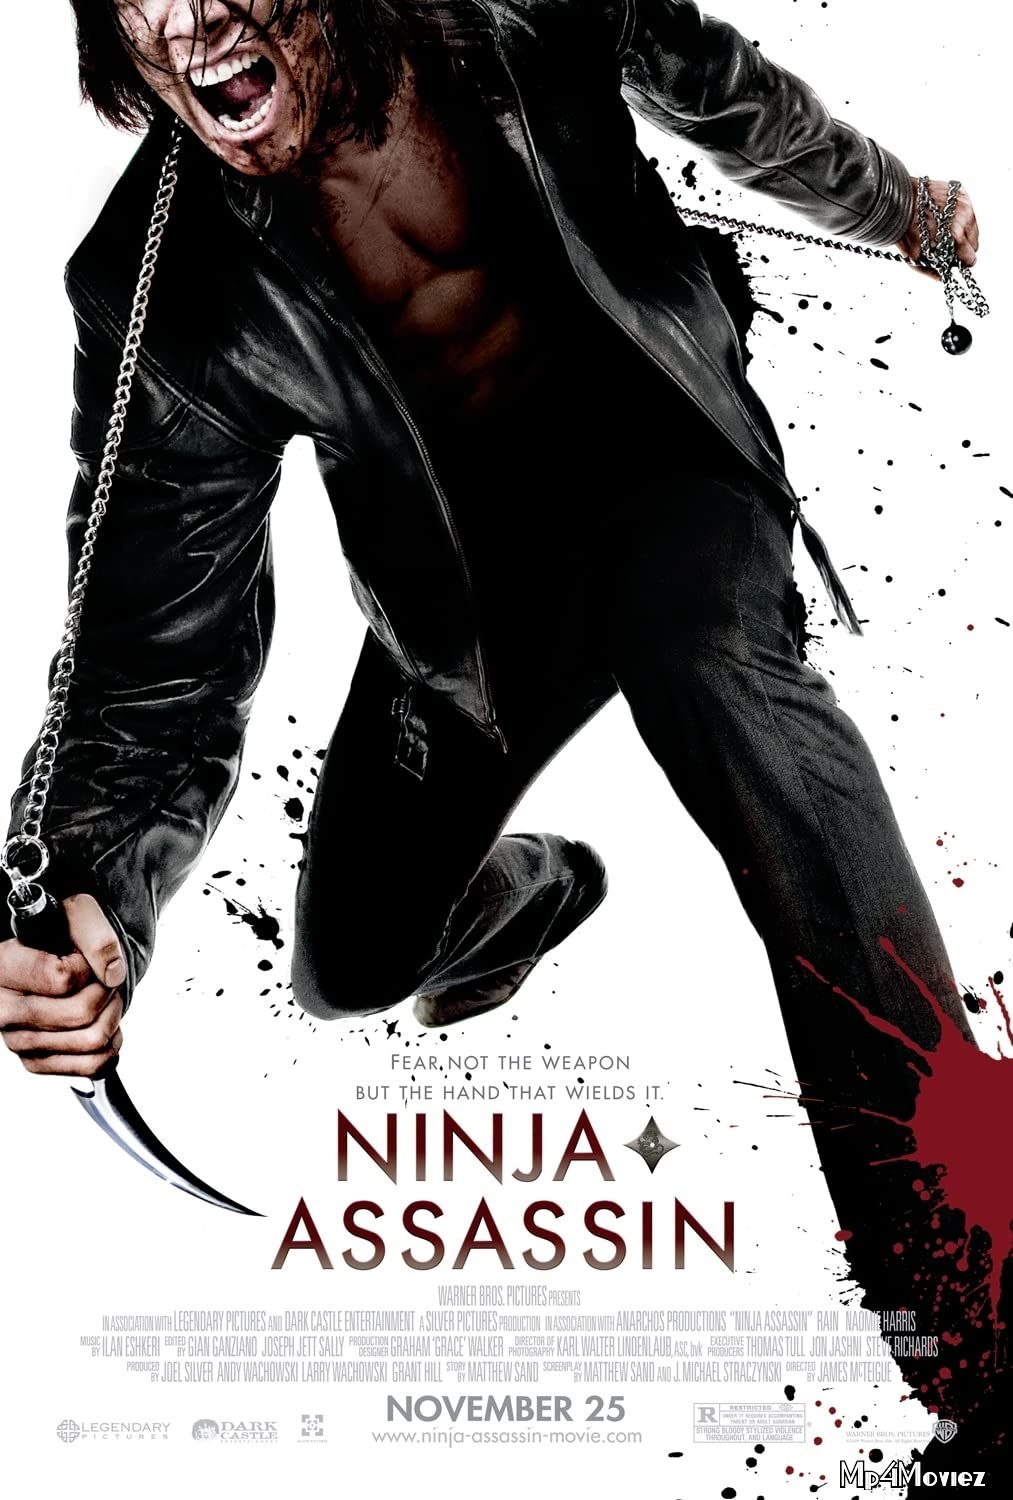 Ninja Assassin (2009) Hindi Dubbed BRRip download full movie